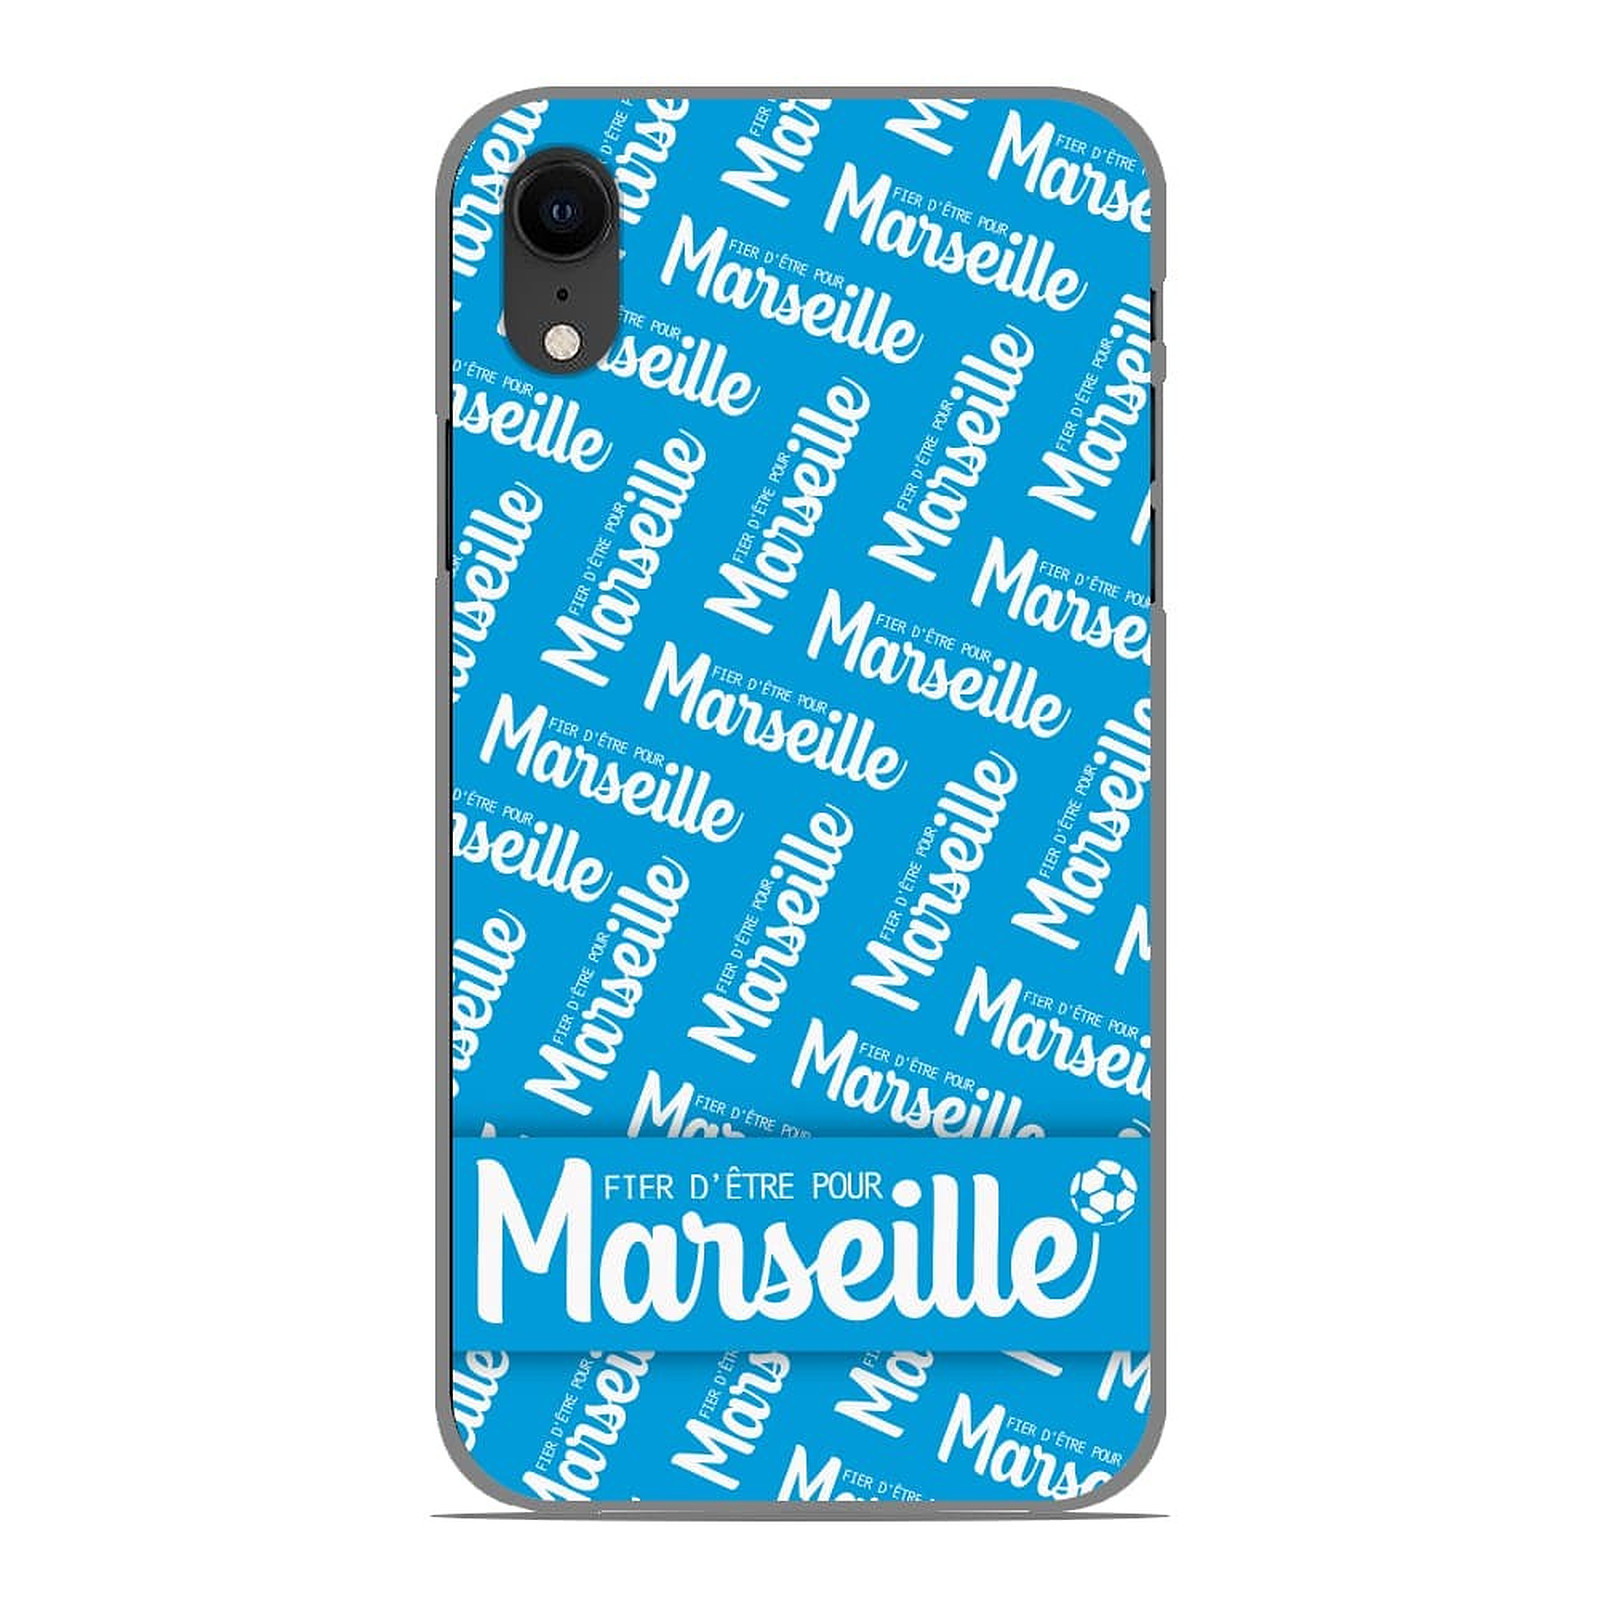 1001 Coques Coque silicone gel Apple iPhone XR motif Fier d'etre pour Marseille - Coque telephone 1001Coques